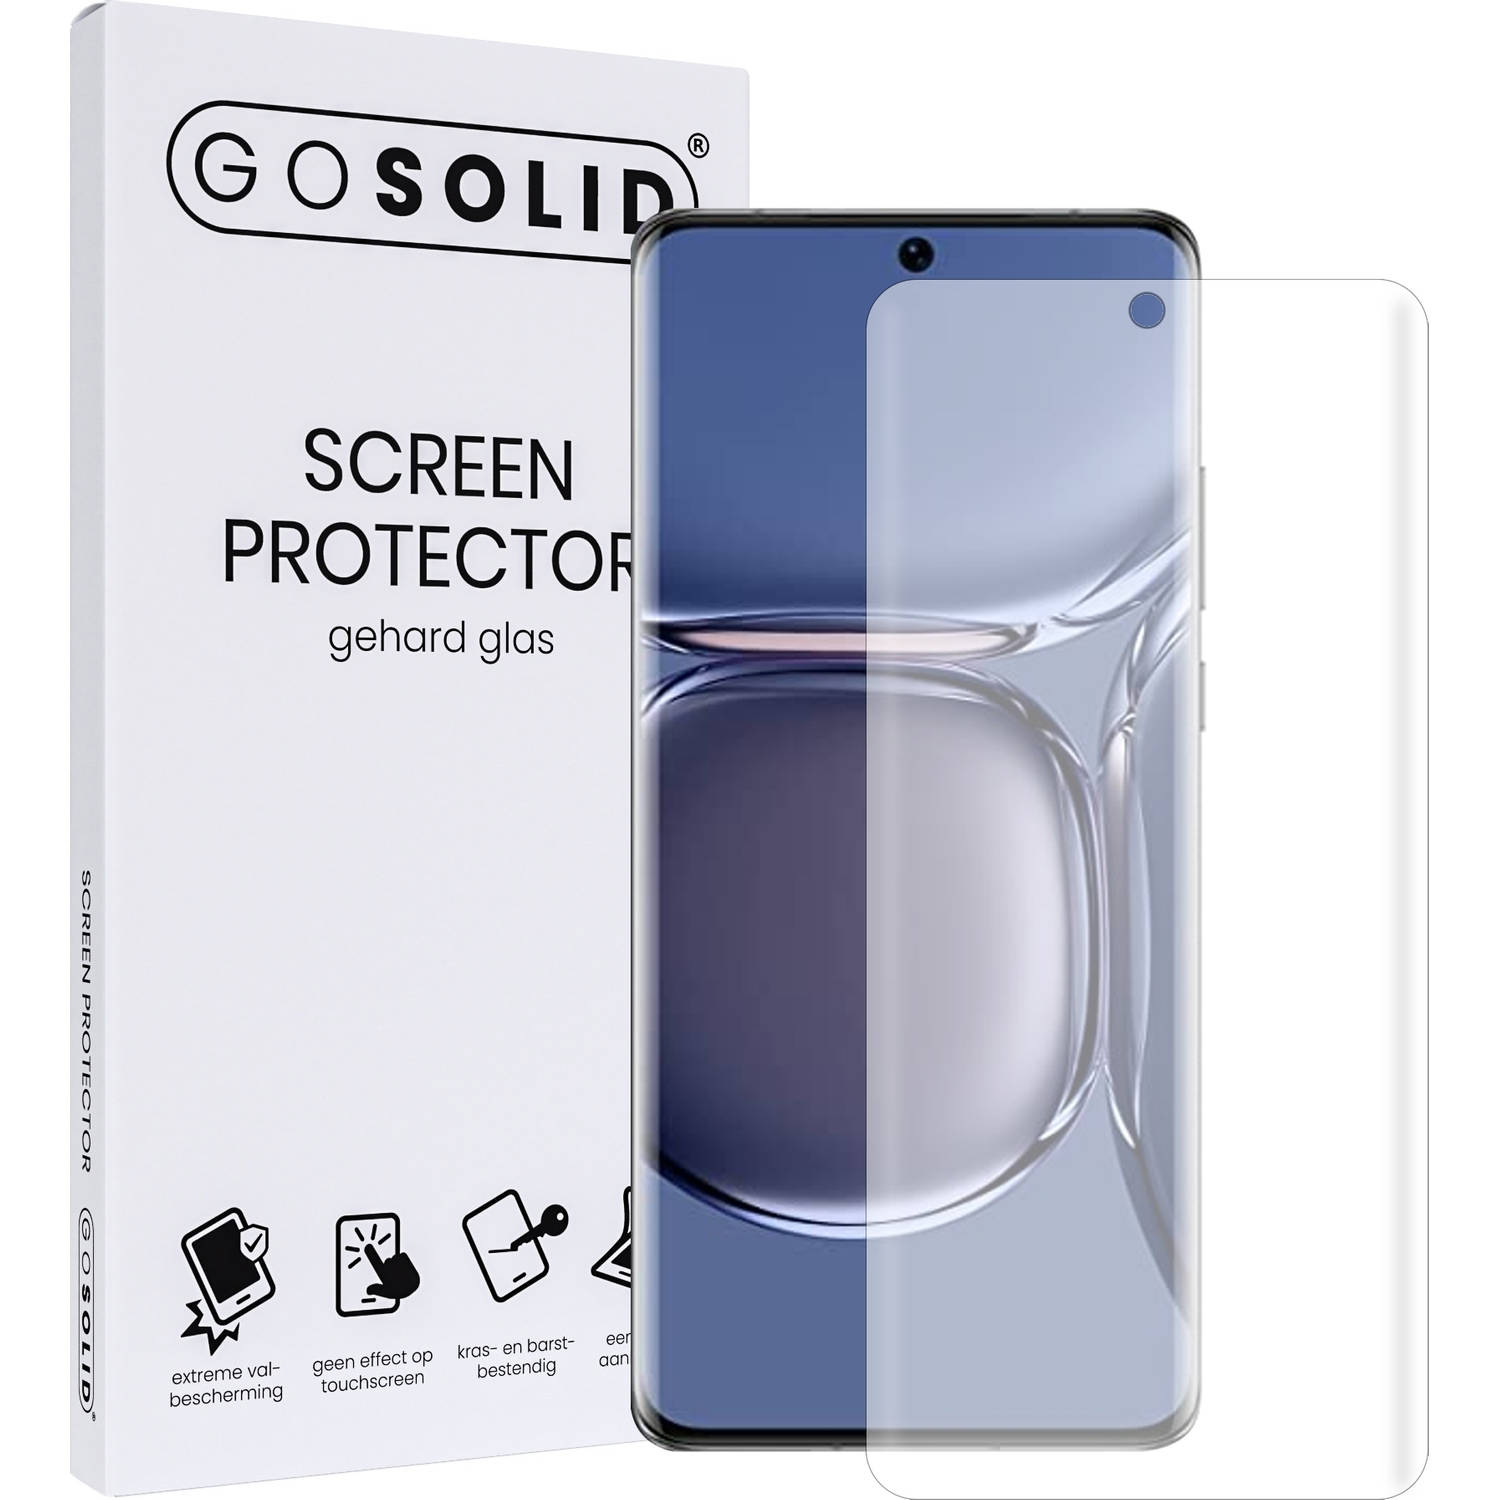 GO SOLID! Screenprotector voor Huawei P50 Pro gehard glas